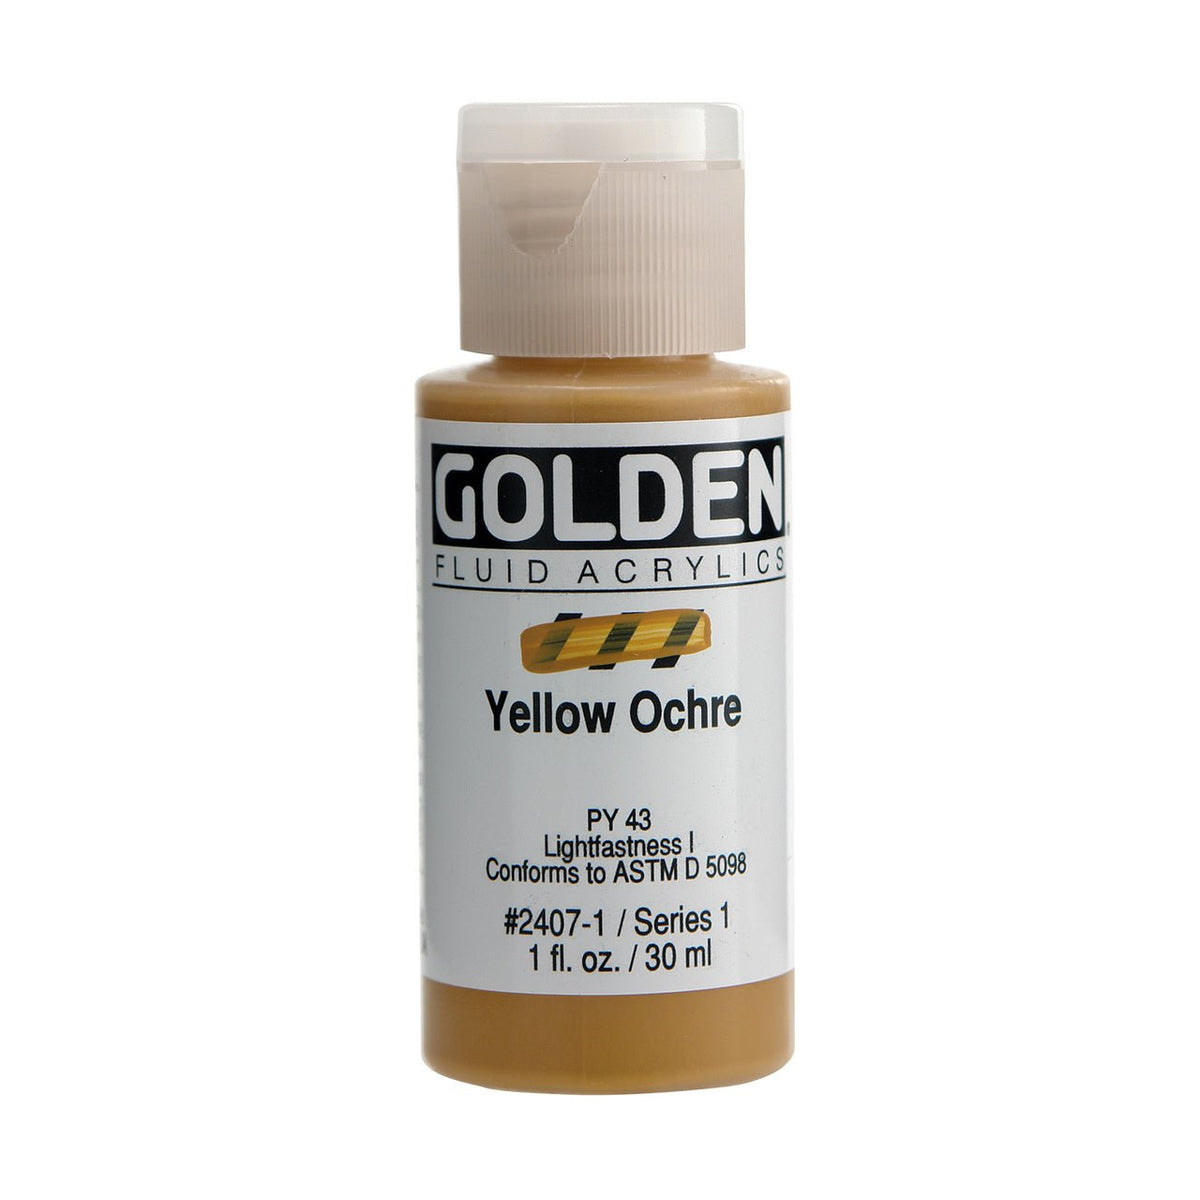 Golden Fluid Acrylic Yellow Ochre 1 oz - merriartist.com